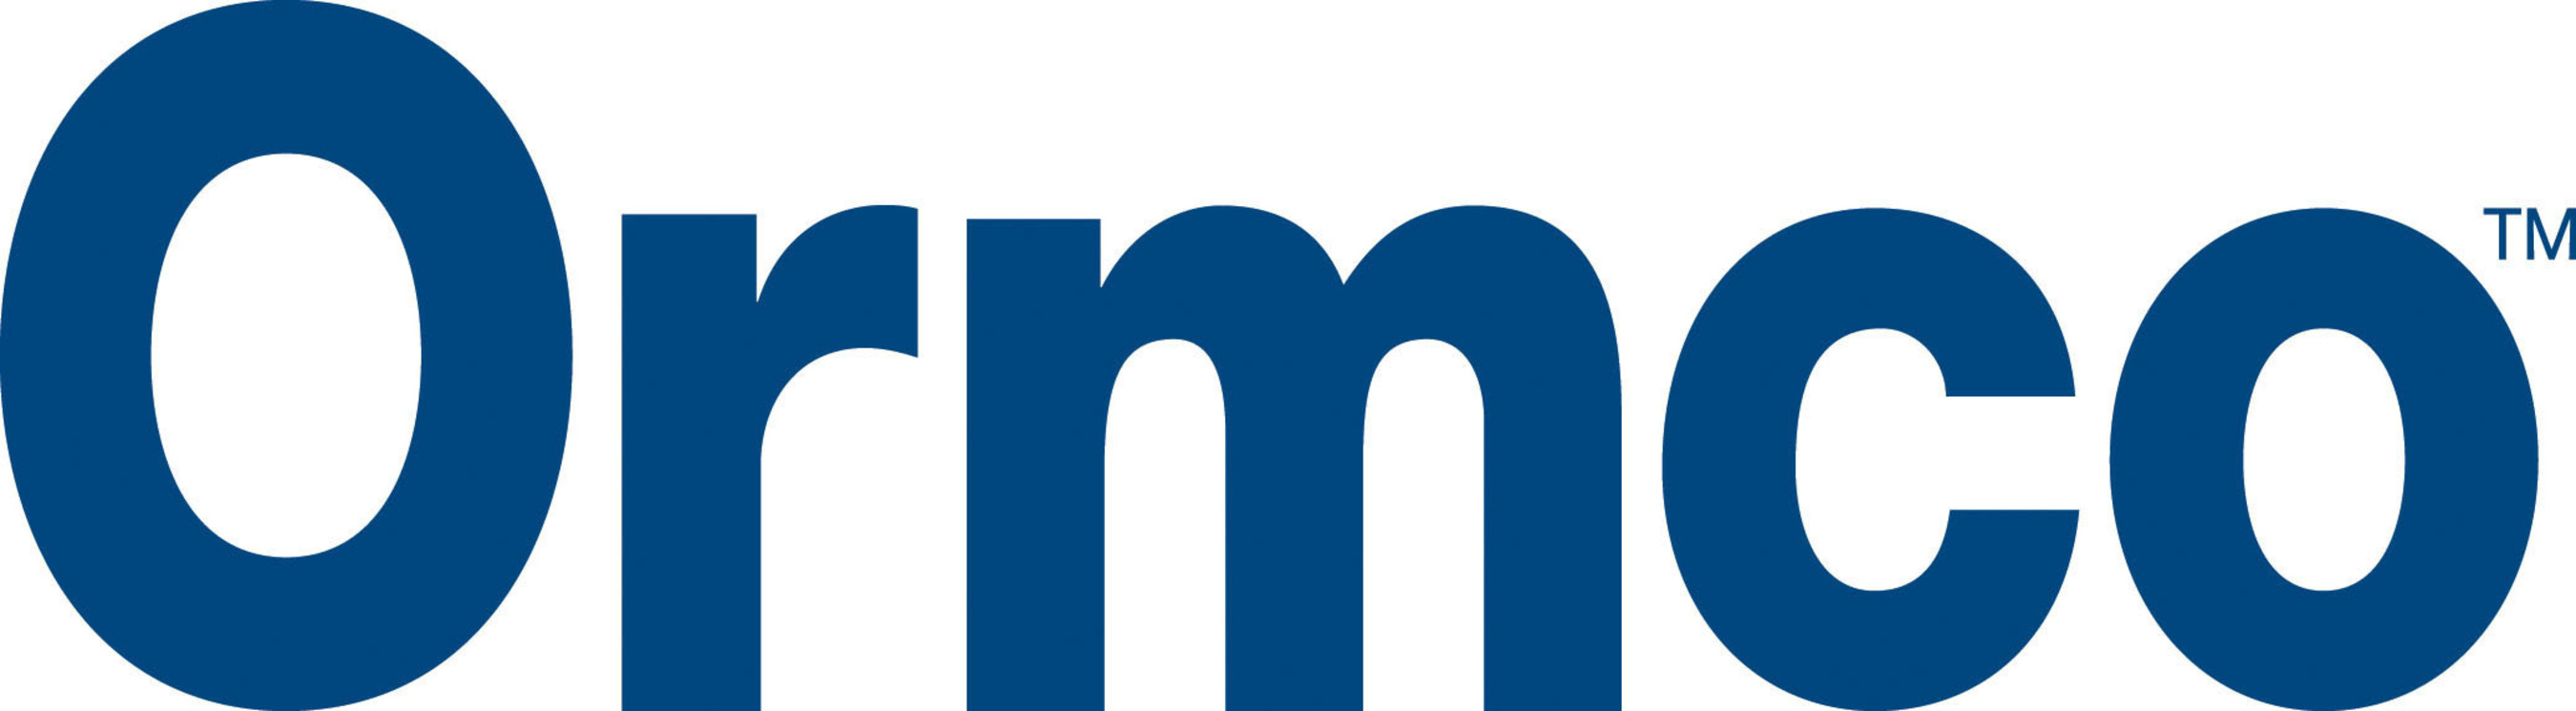 Ormco Corporation Logo. (PRNewsFoto/Ormco Corporation) (PRNewsFoto/ORMCO CORPORATION)